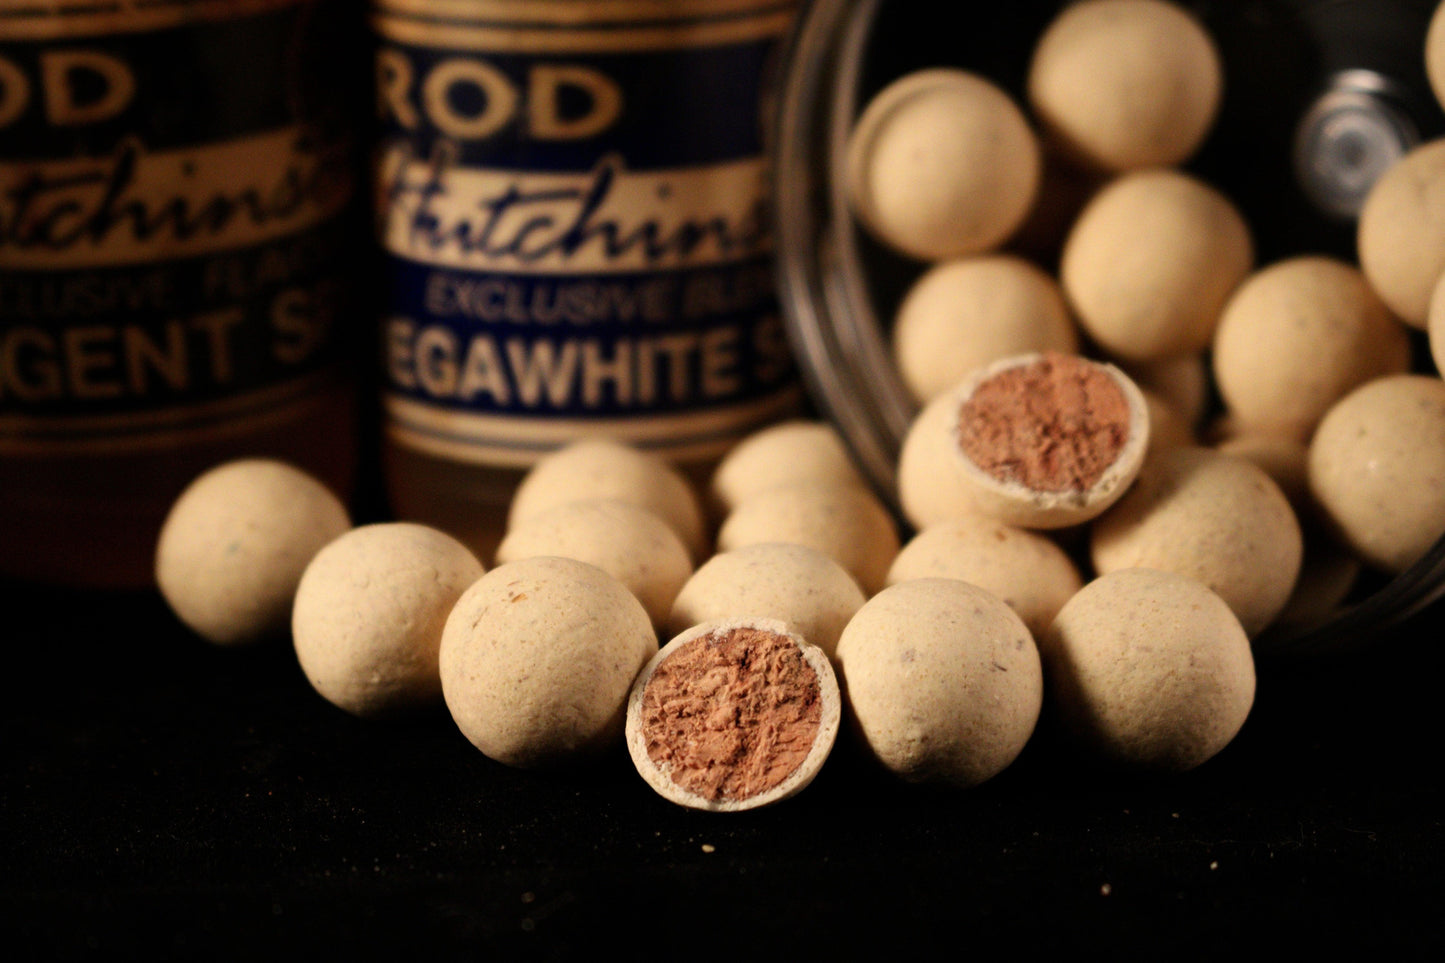 White Spice (Megawhite & Pungent Spice) corkballs - Forgotten Flavours